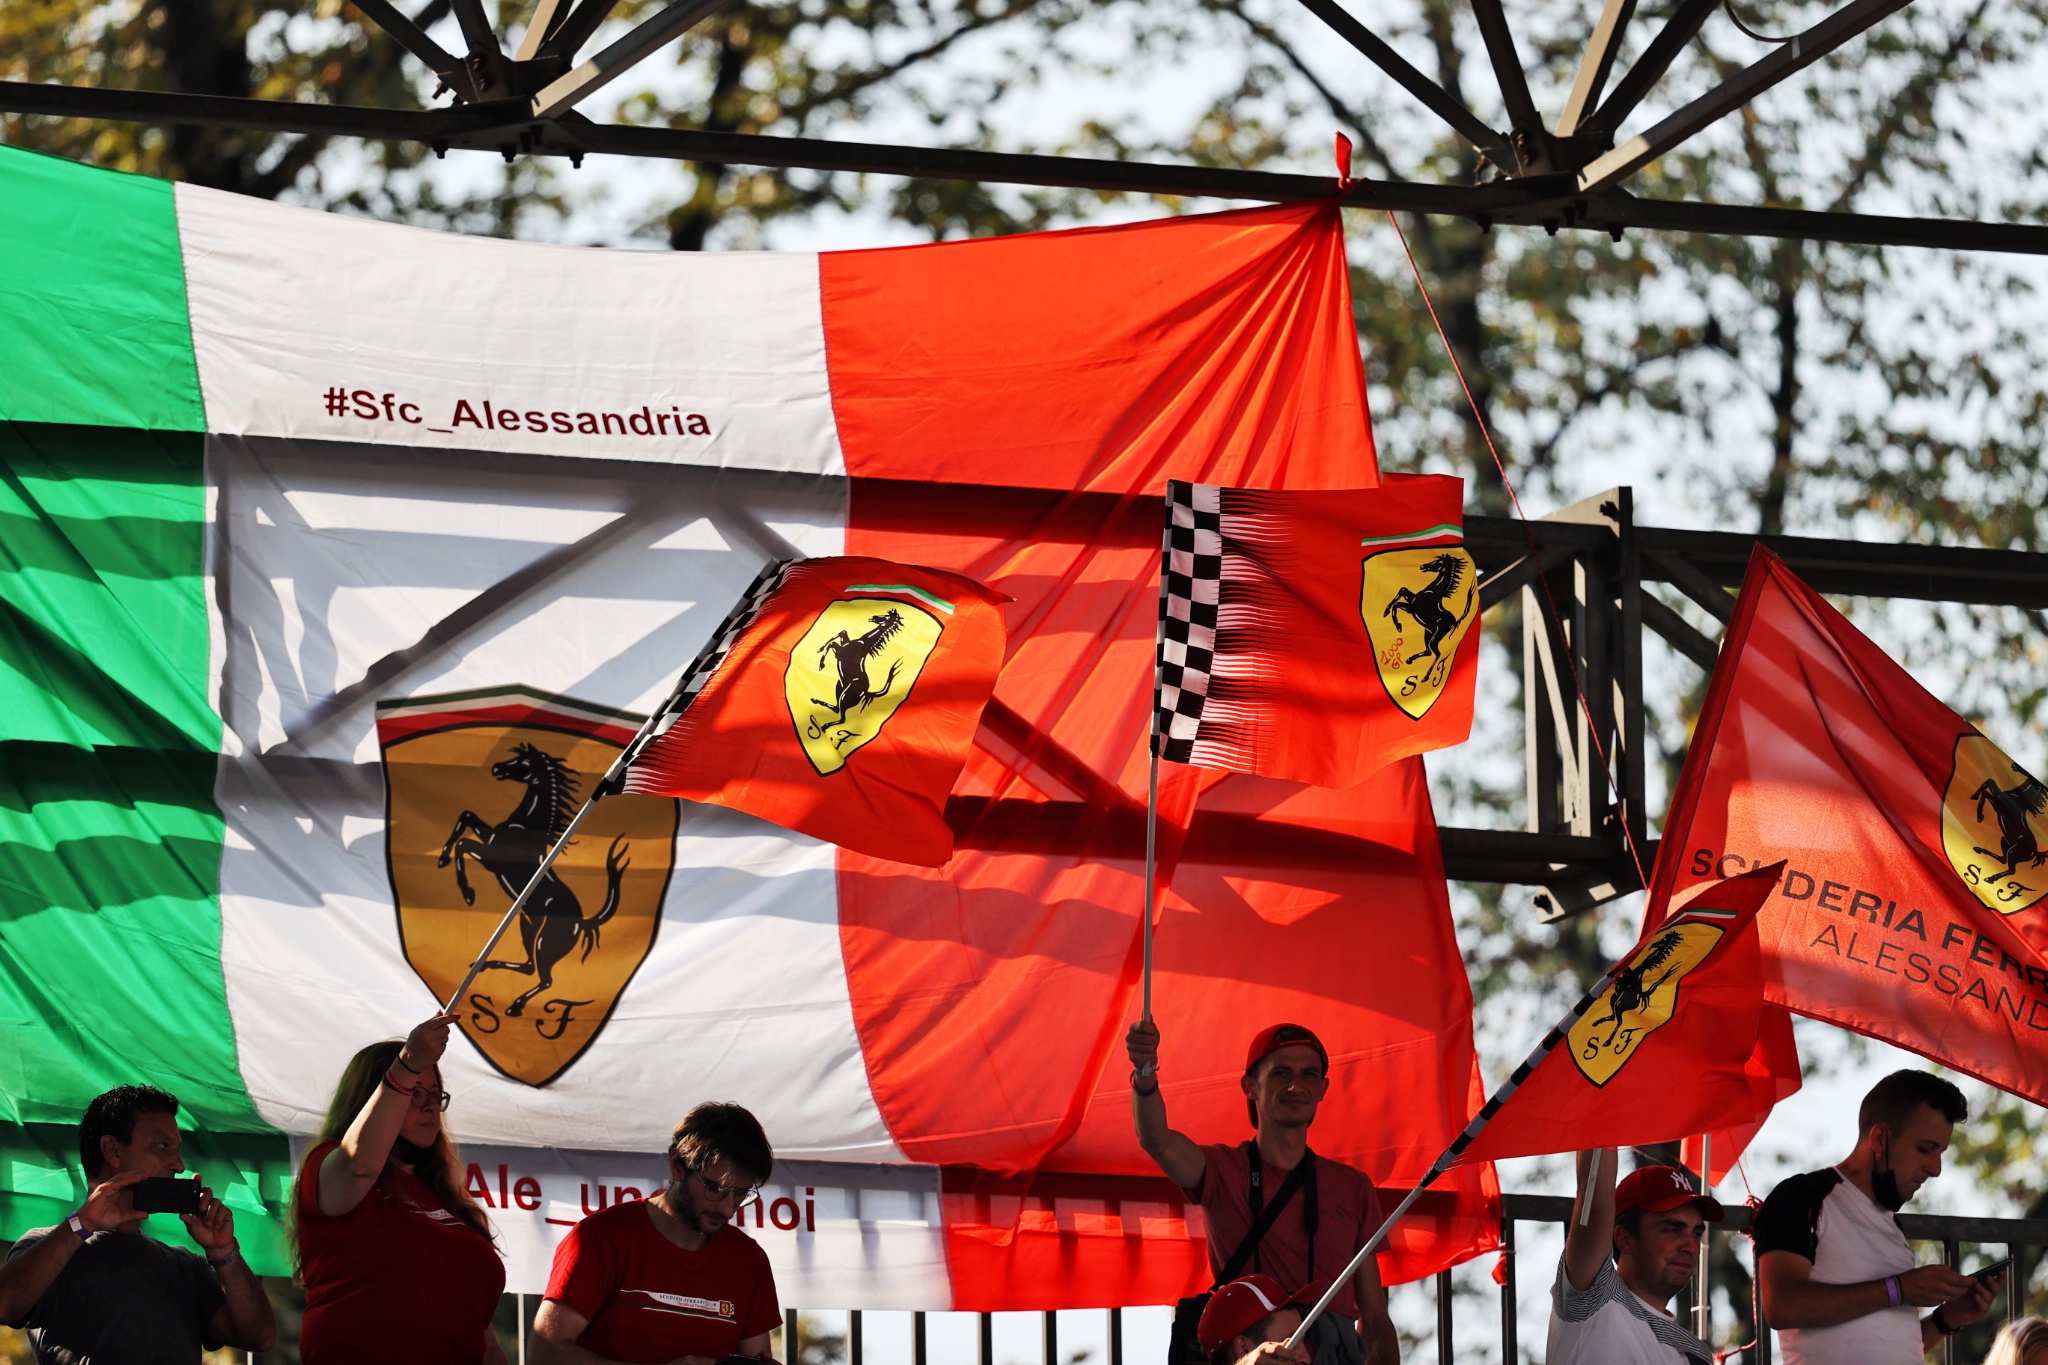 Circuit atmosphere - Ferrari fans in the